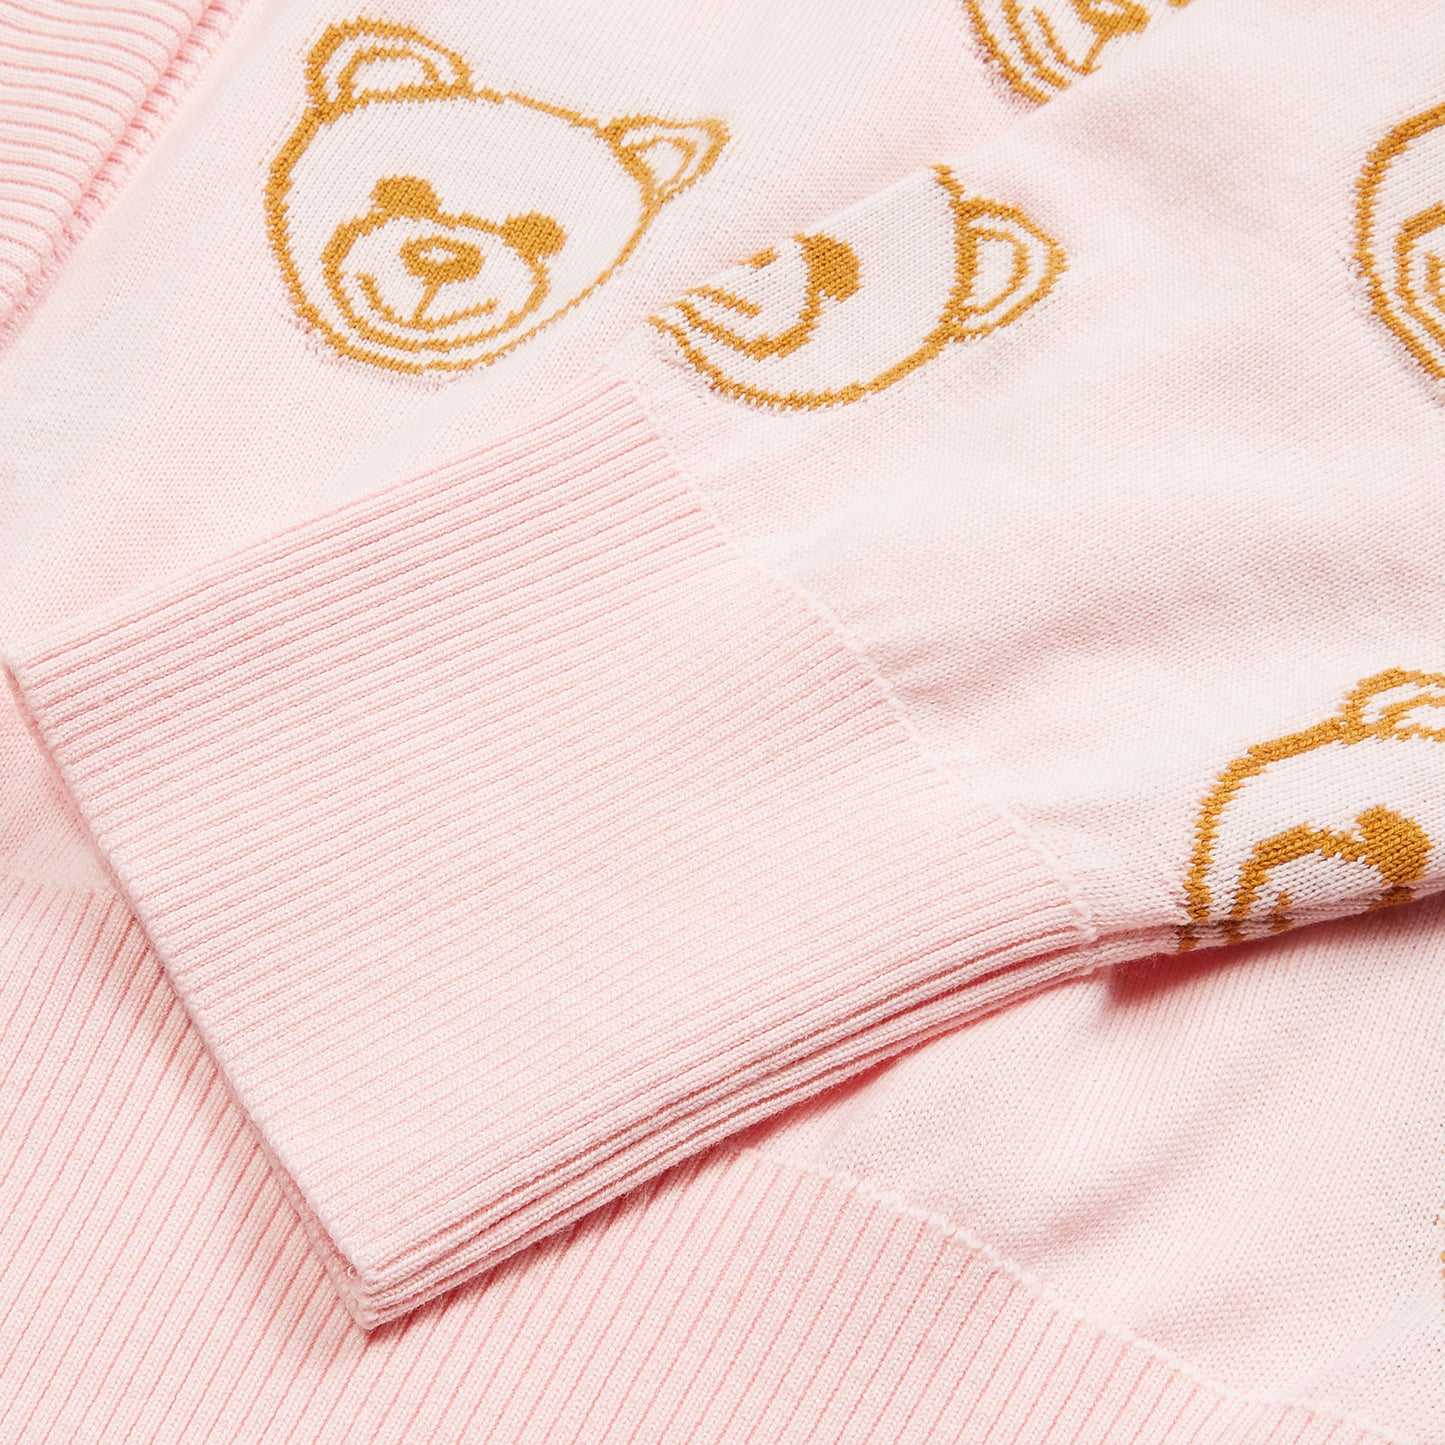 Moschino Teddy Bear Sweater Cardigan (Fantasy print Pink)